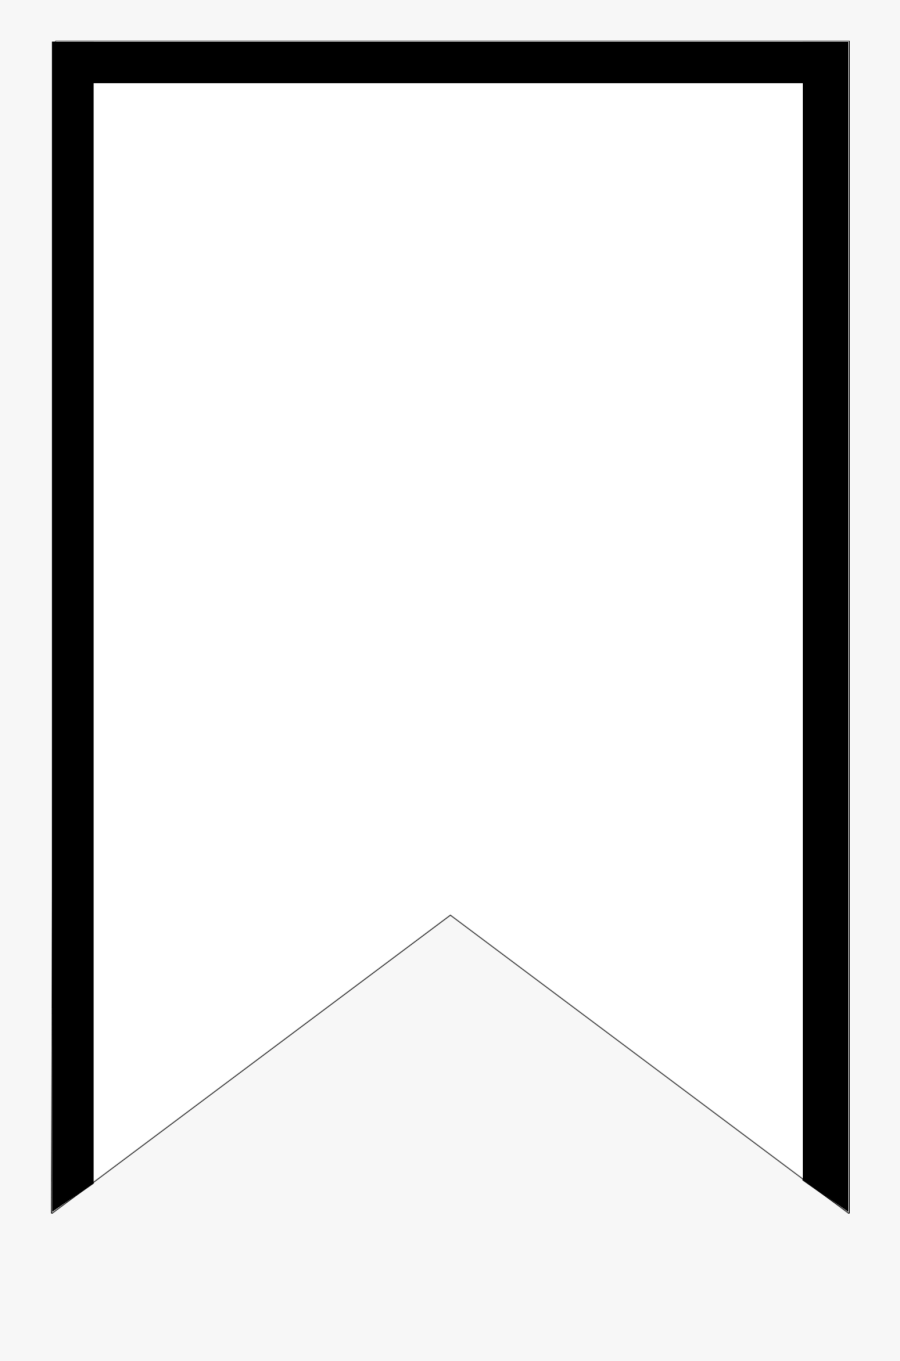 Pennant Banner Template Microsoft Wordable For Cricut - Monochrome, Transparent Clipart